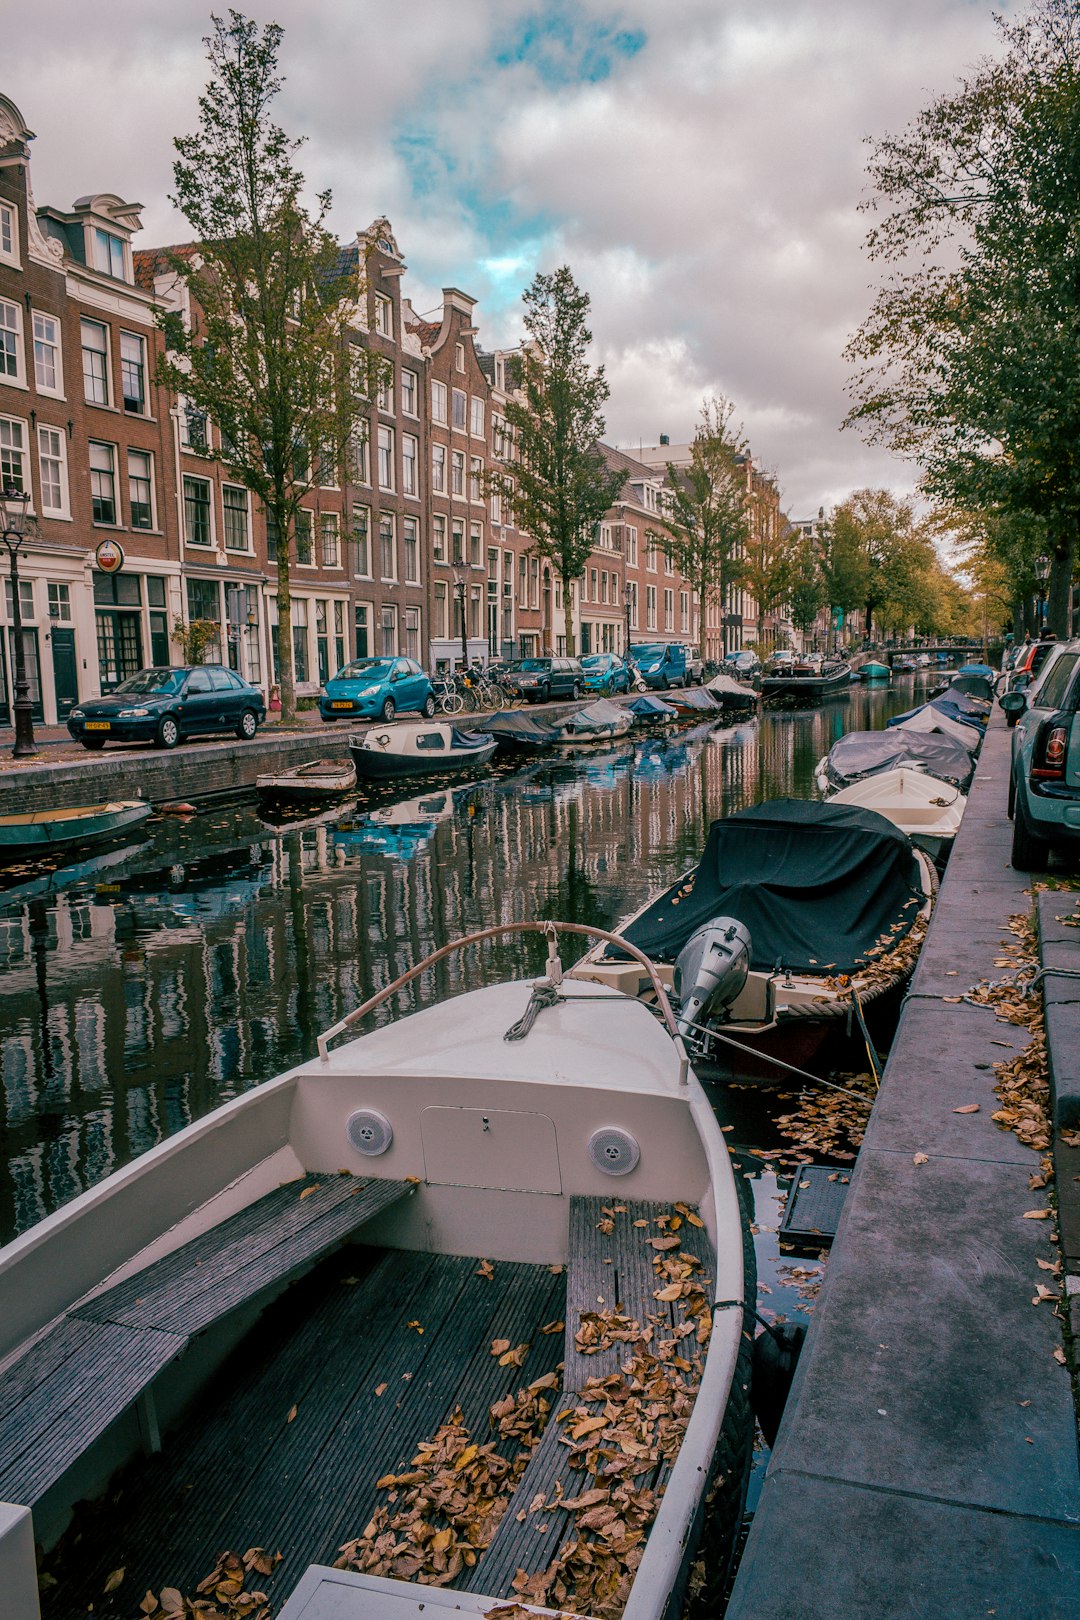 Travel Tips and Stories of Jordaan in Netherlands